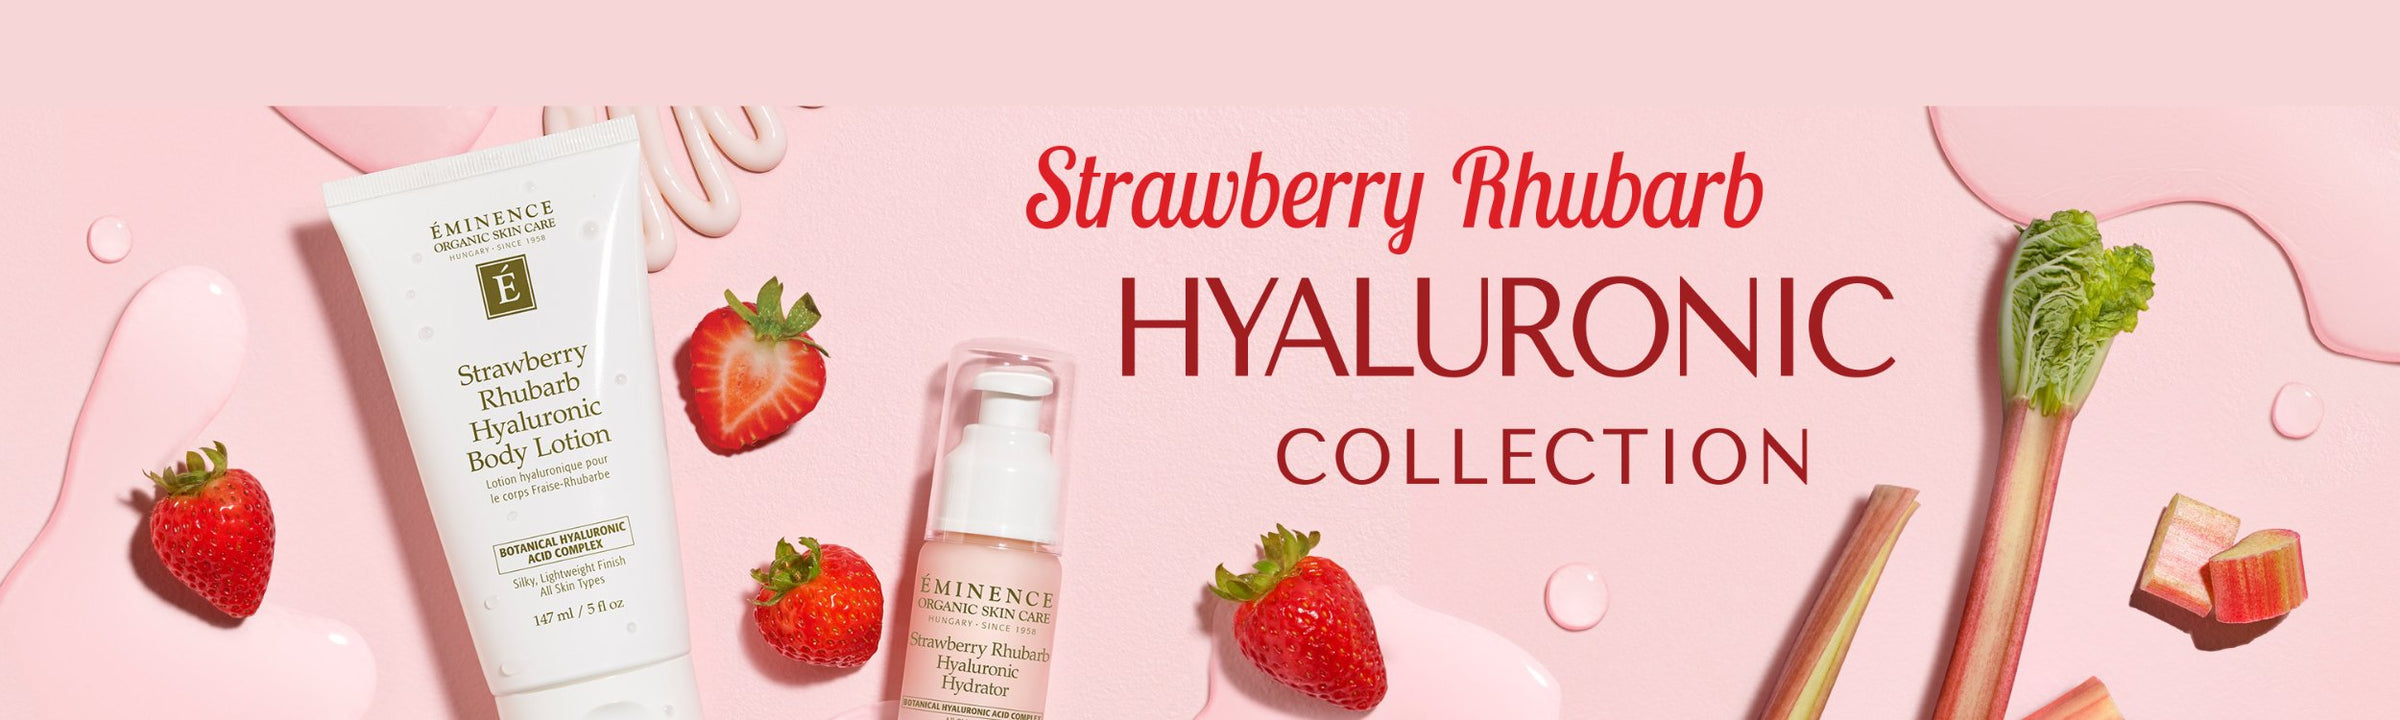 eminence organics strawberry rhubarb hyaluronic collection